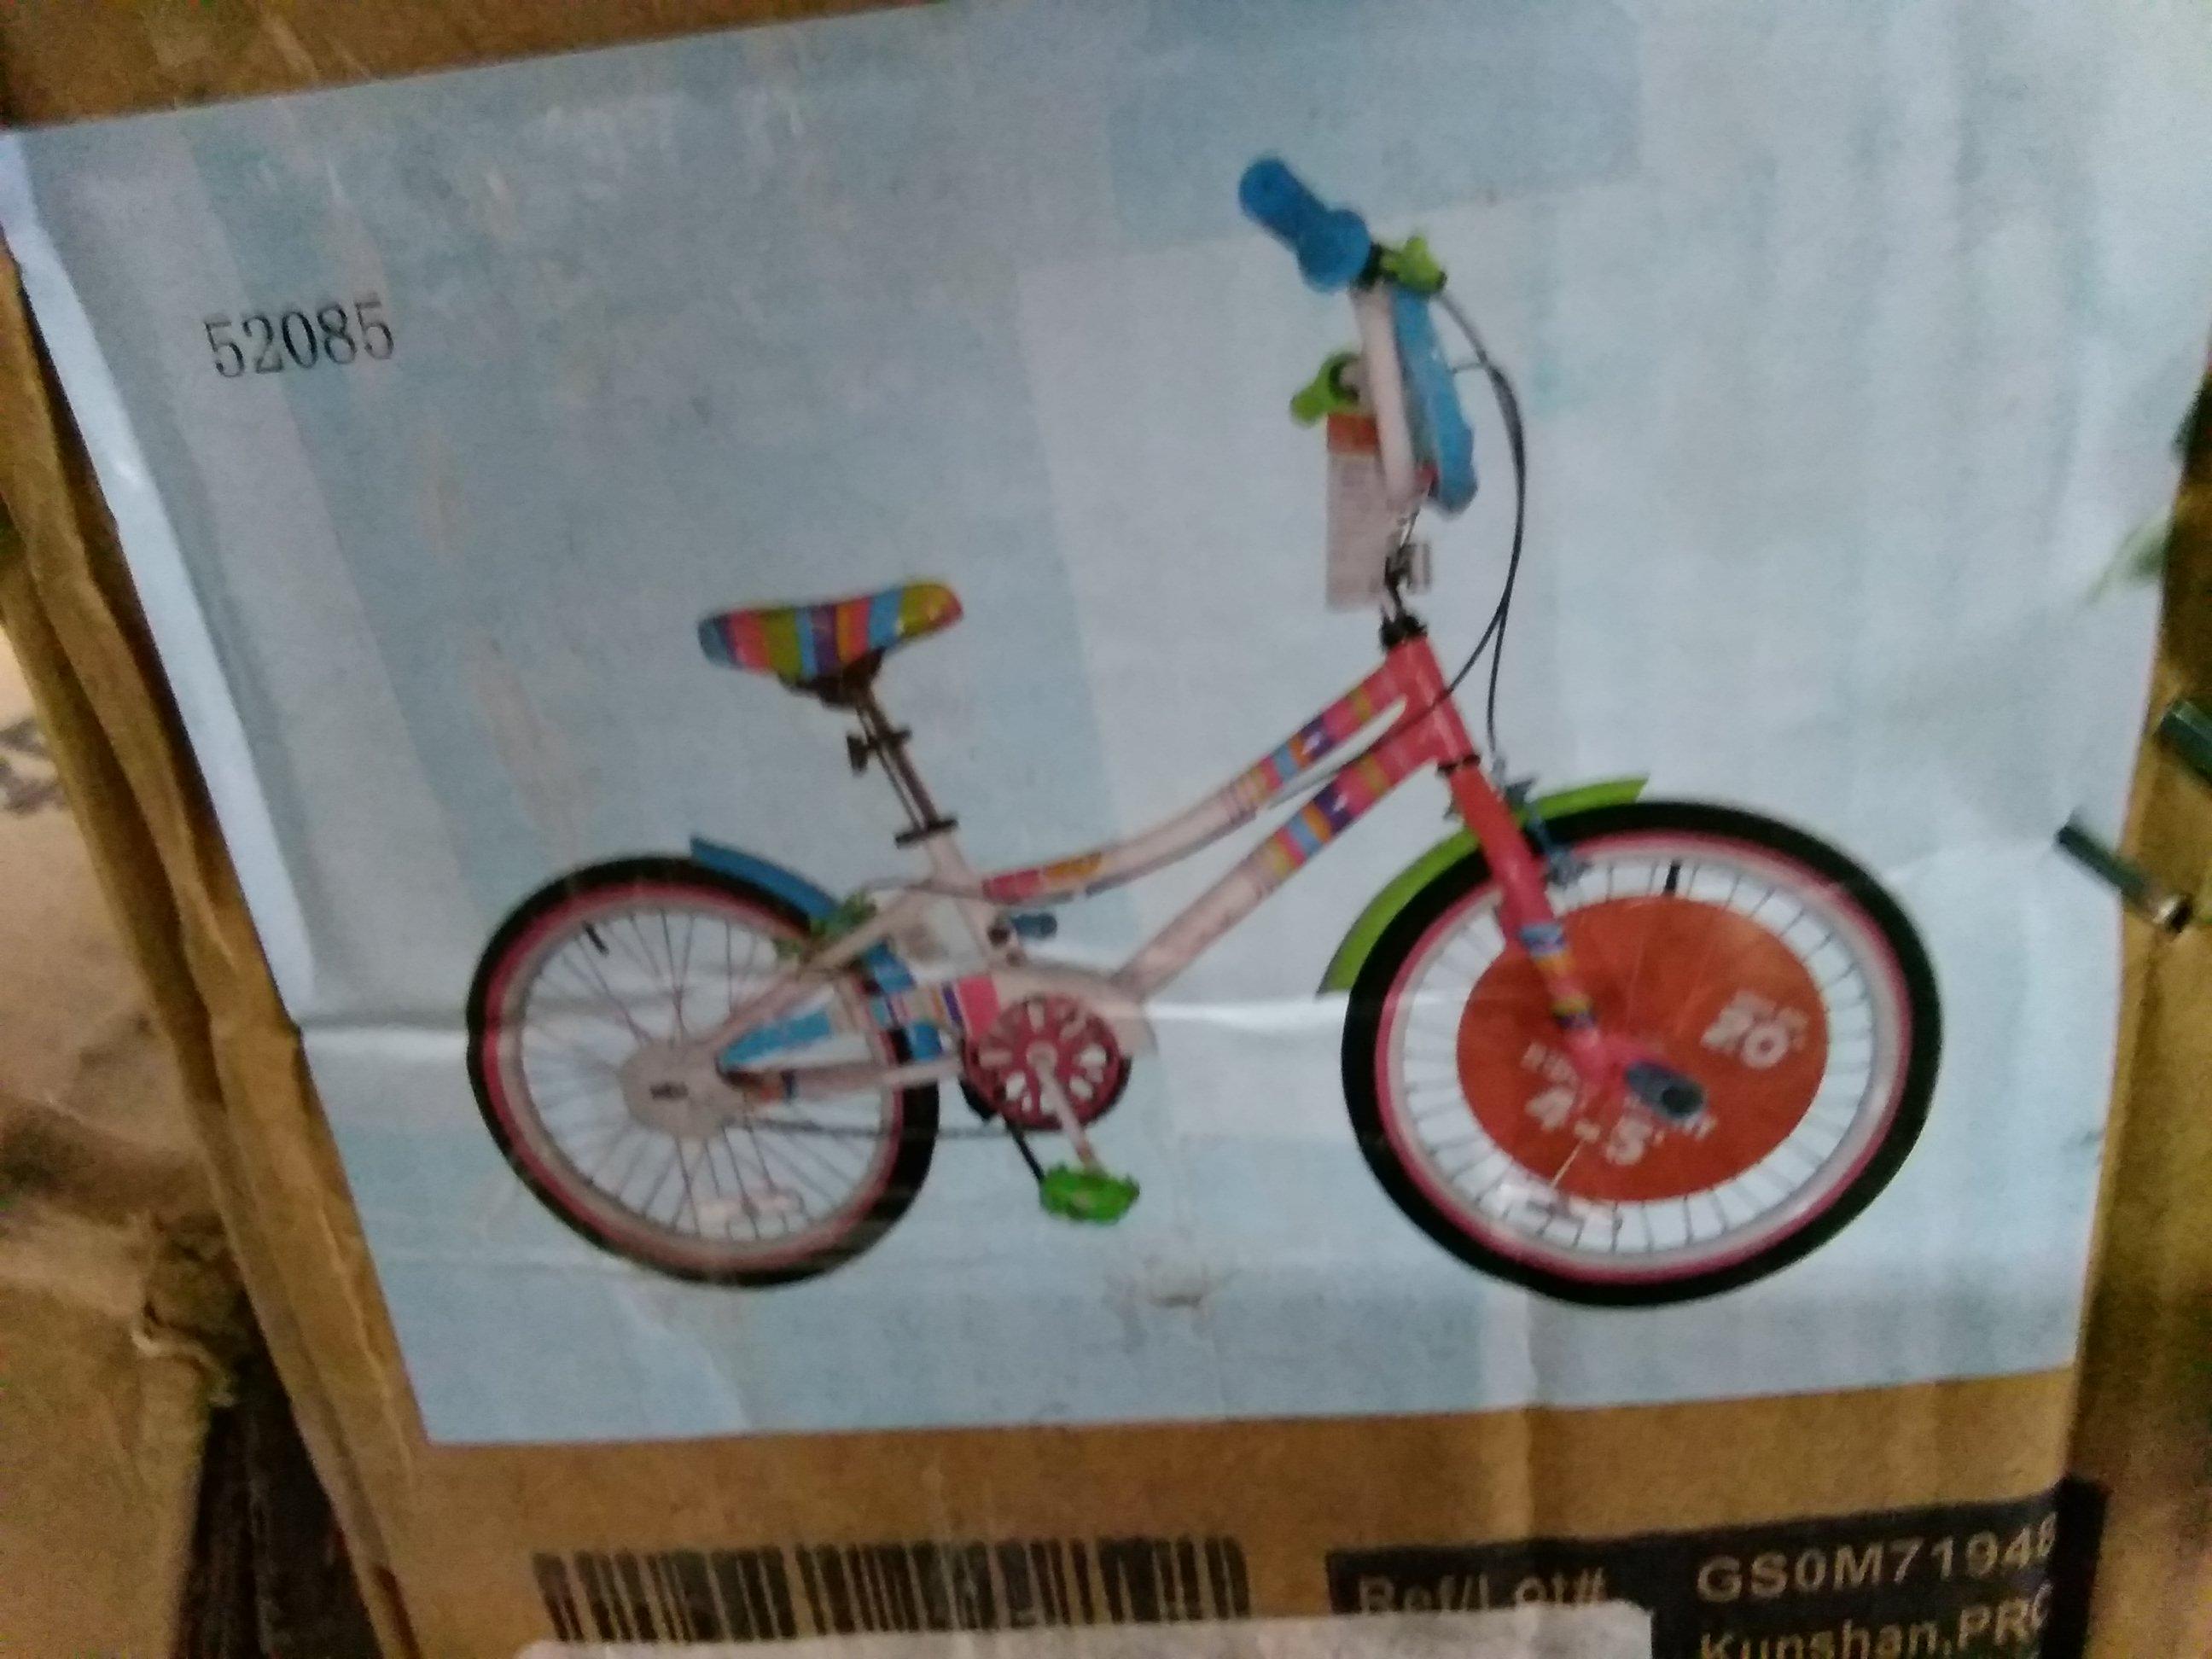 20" Girl's Little Miss Matched Bike. $68 MSRP